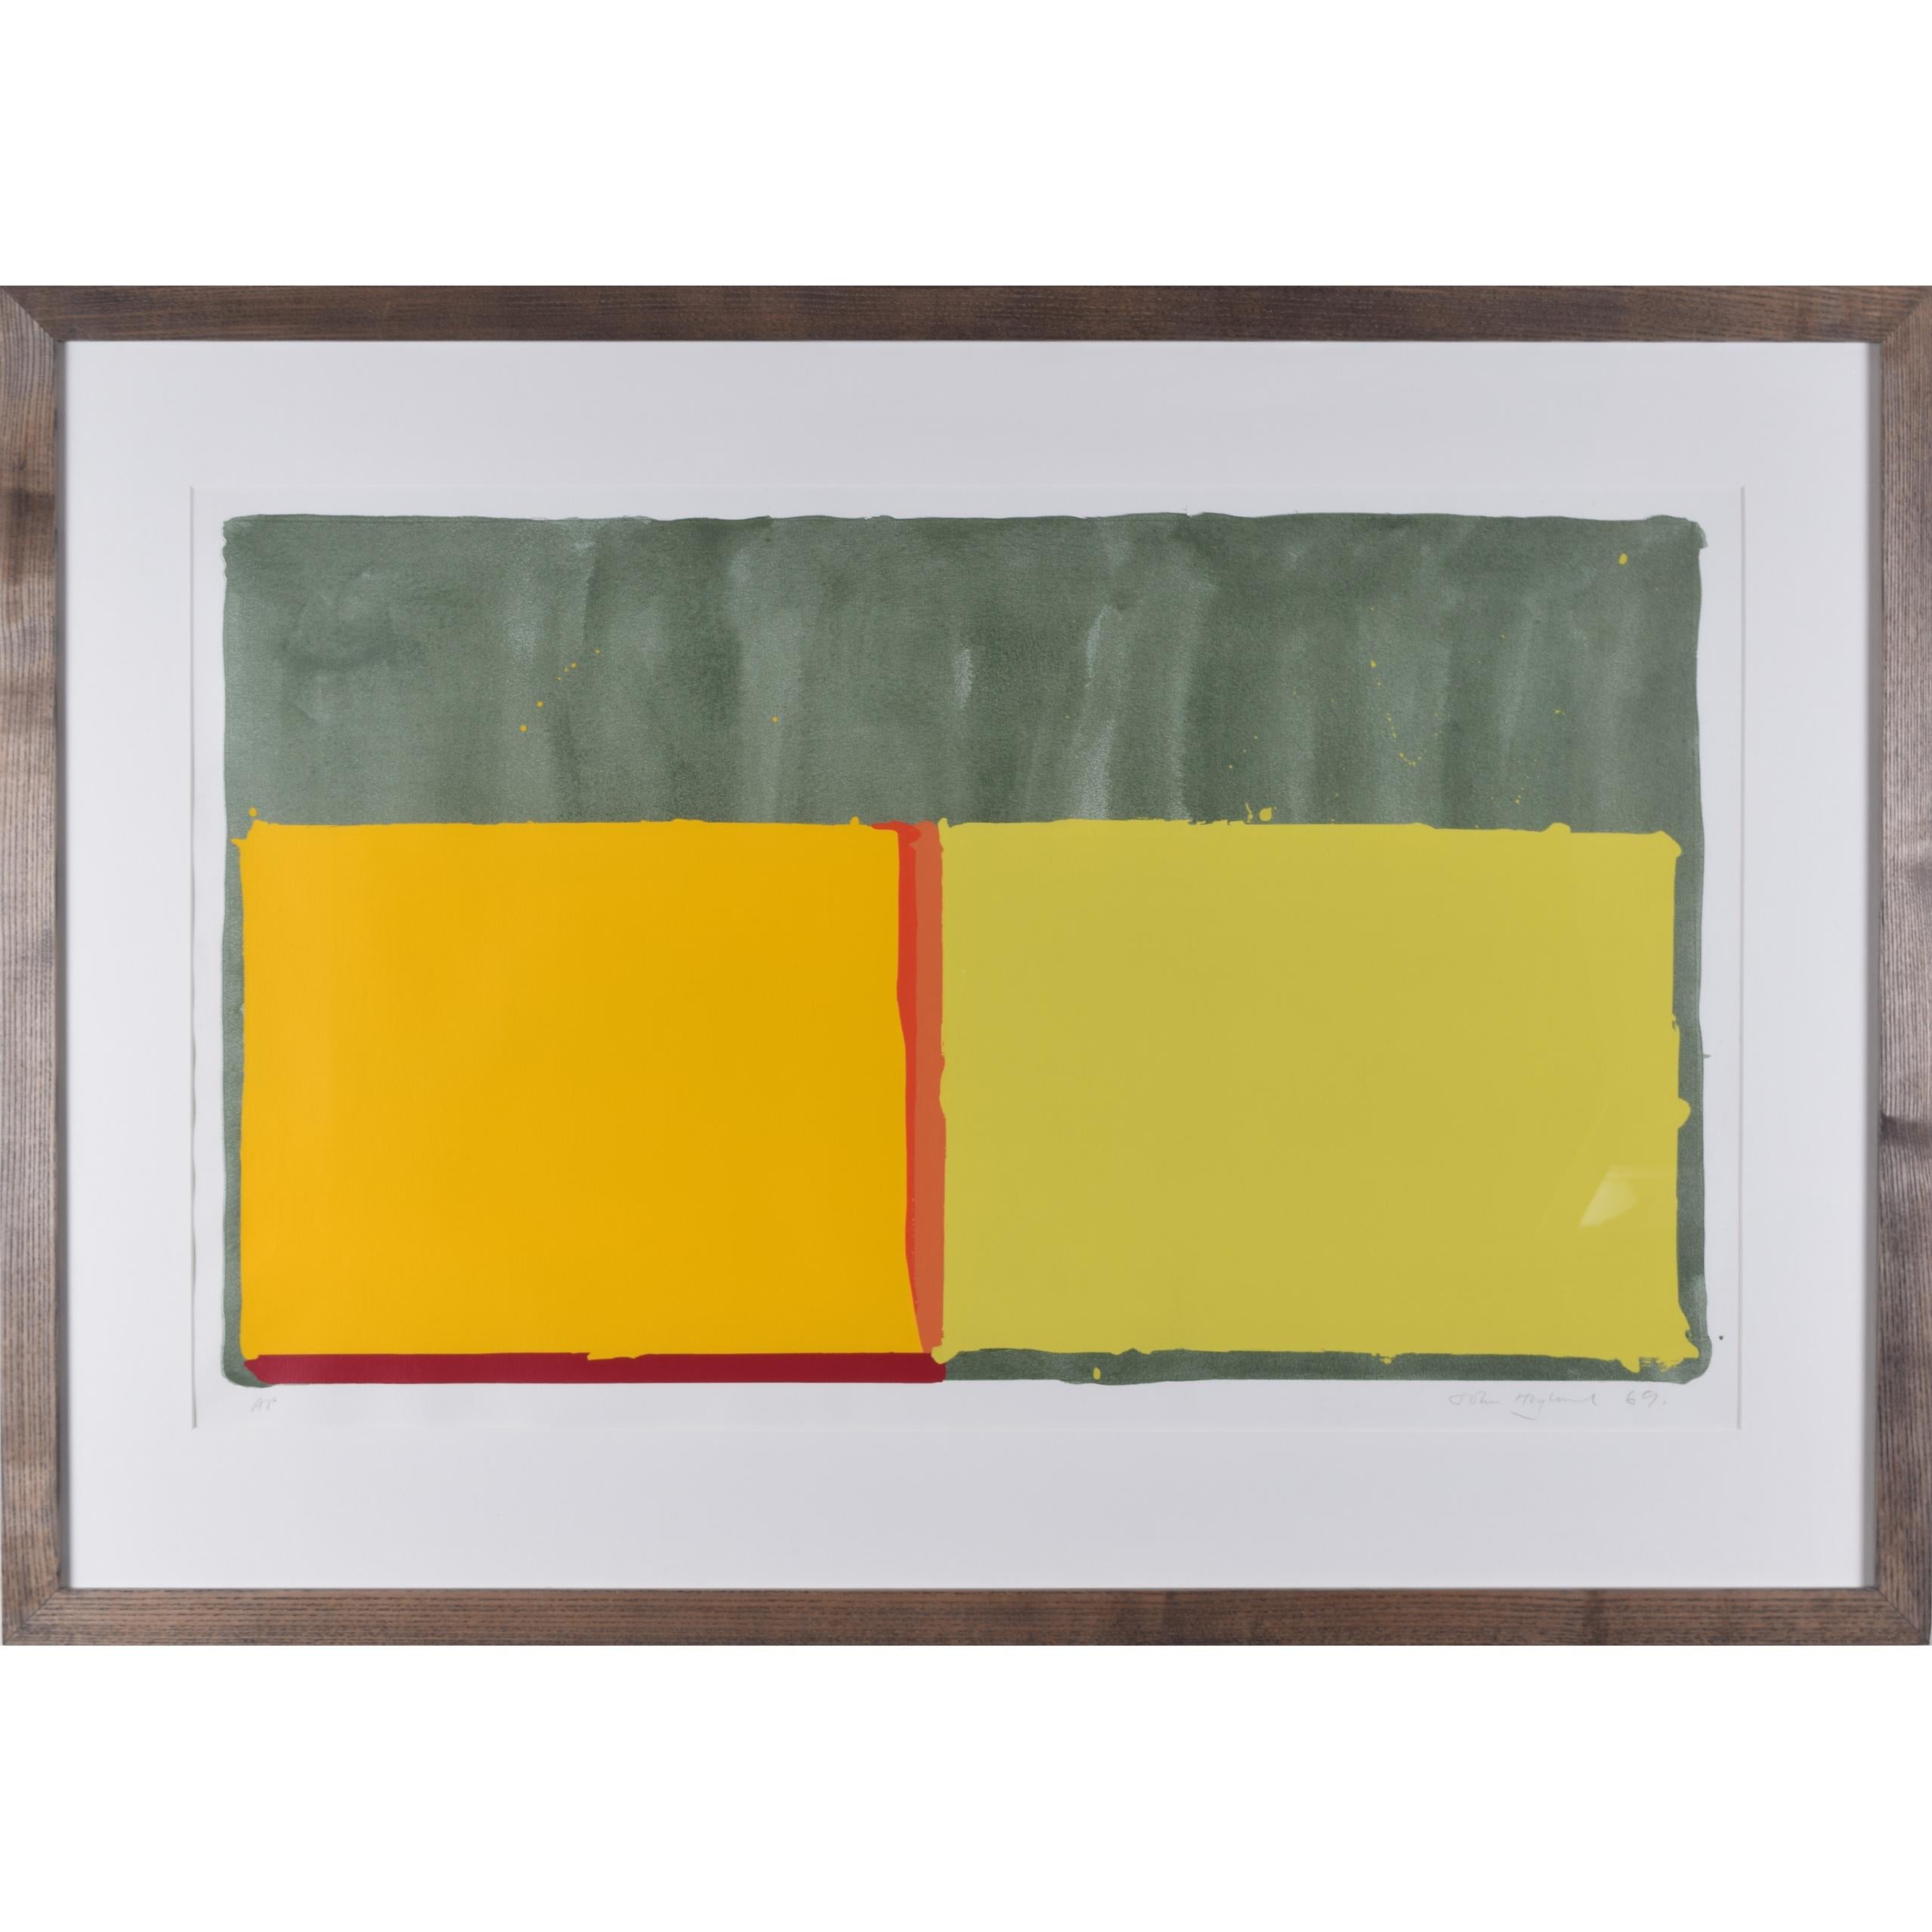 Yellows abstract screenprint by John Hoyland 1960s Modern British Art